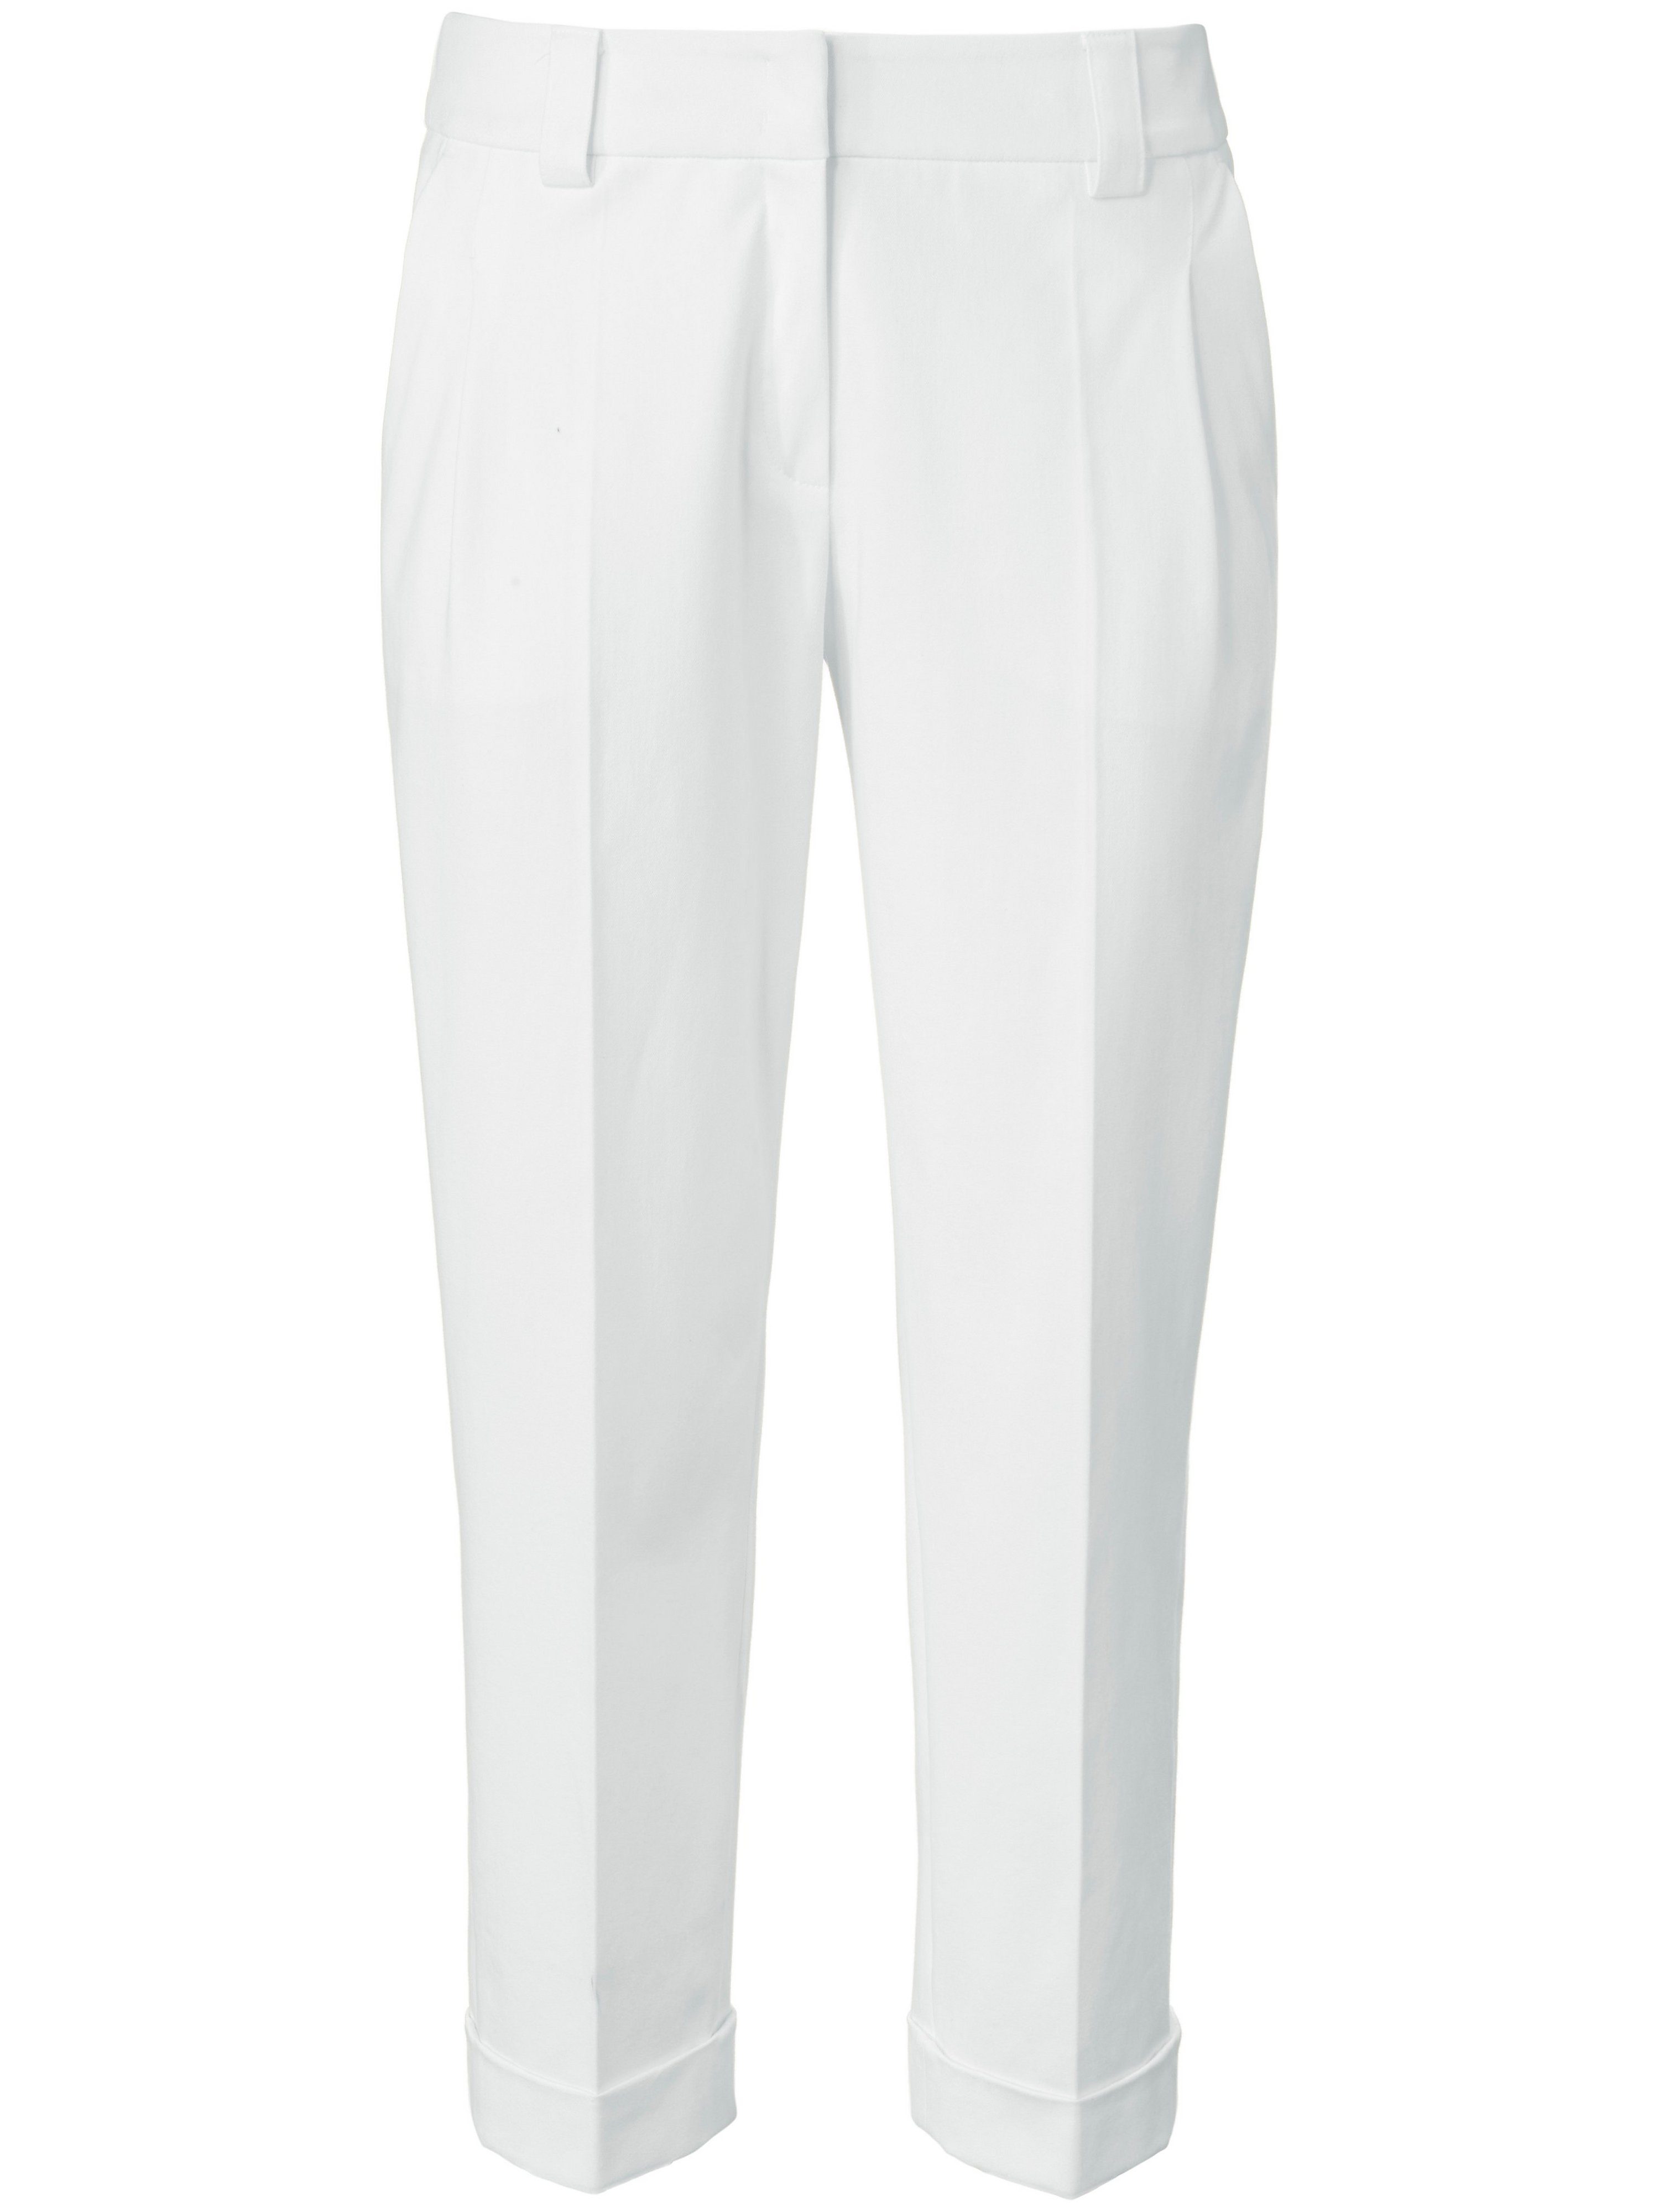 Le pantalon 7/8 con­fortable coton stretch  Fadenmeister Berlin blanc taille 44